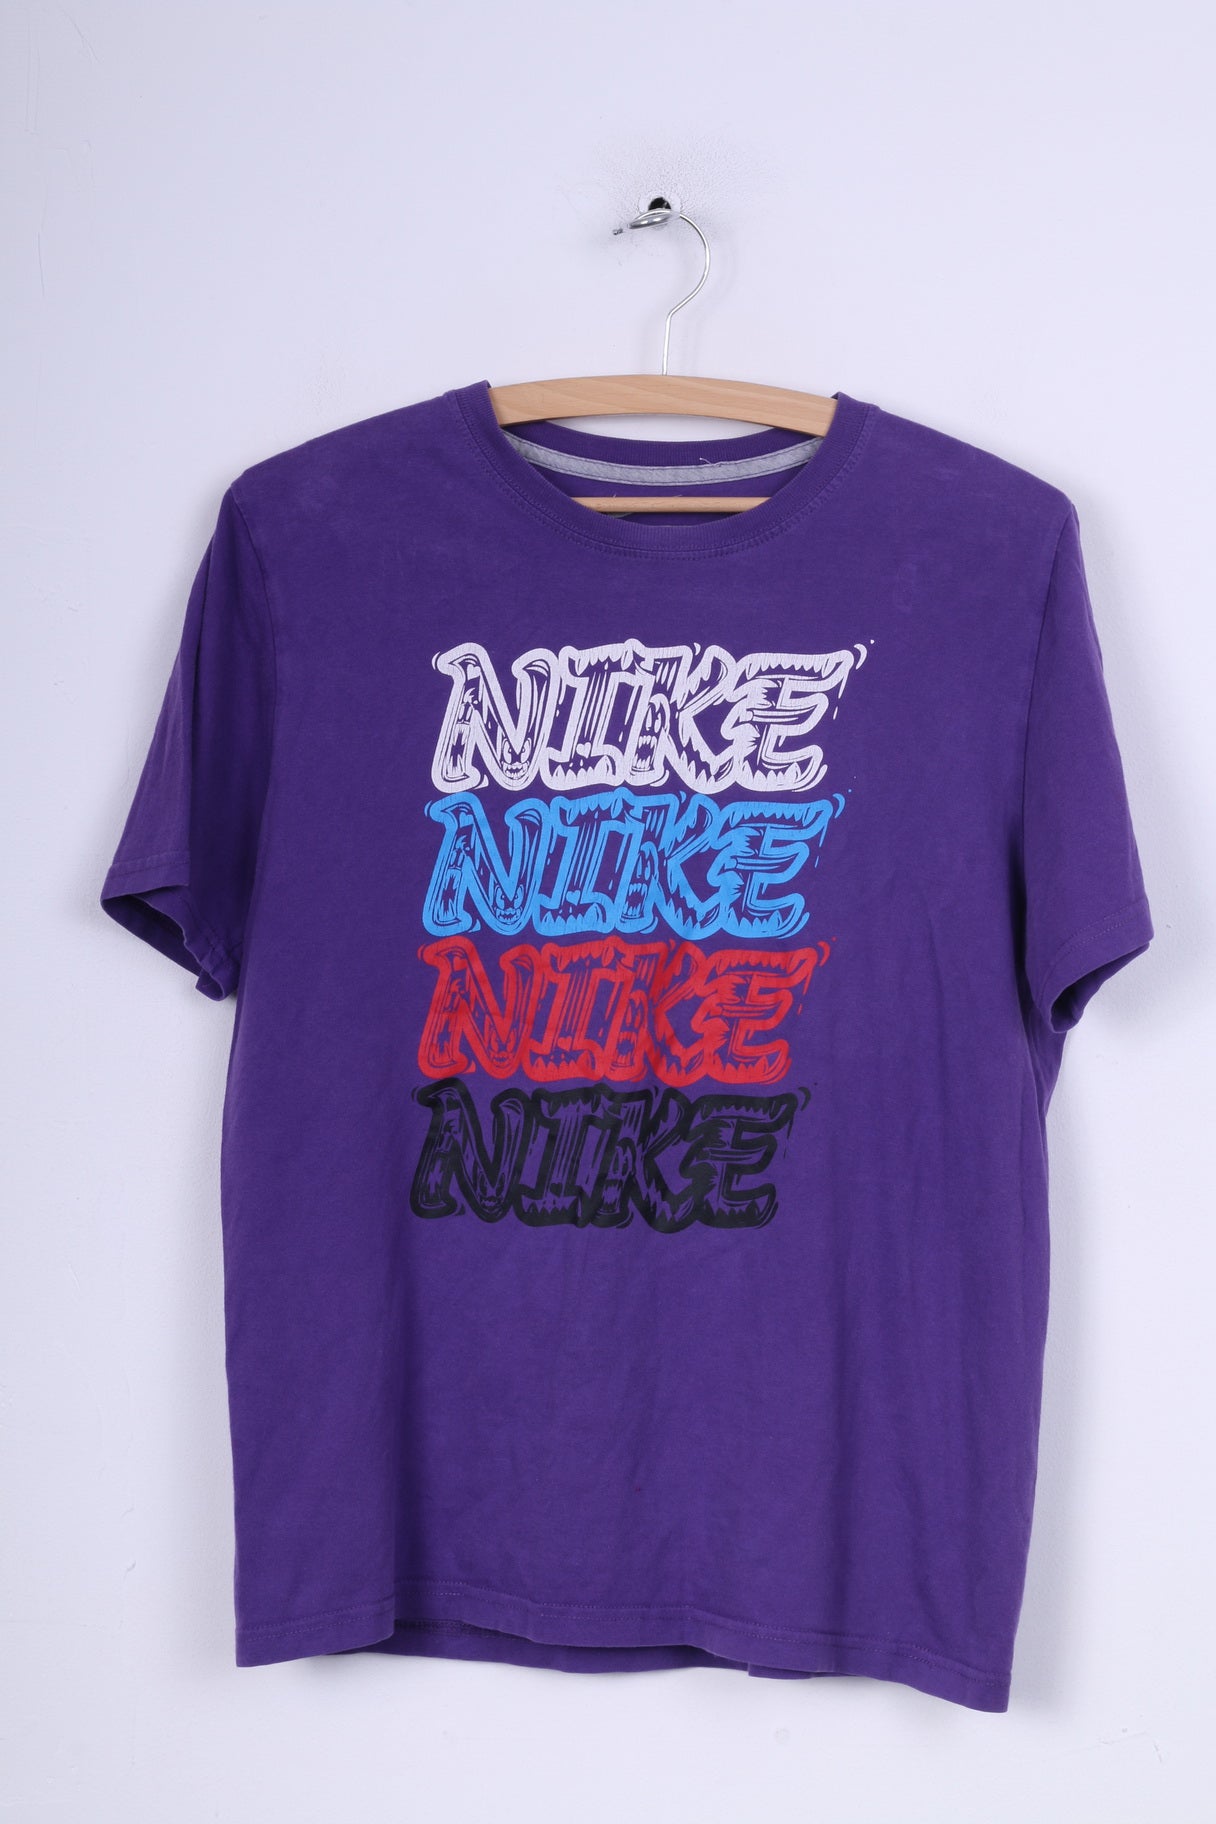 Nike Boys XL 13-15Yrs Graphic Shirt Purple Crew Neck Cotton